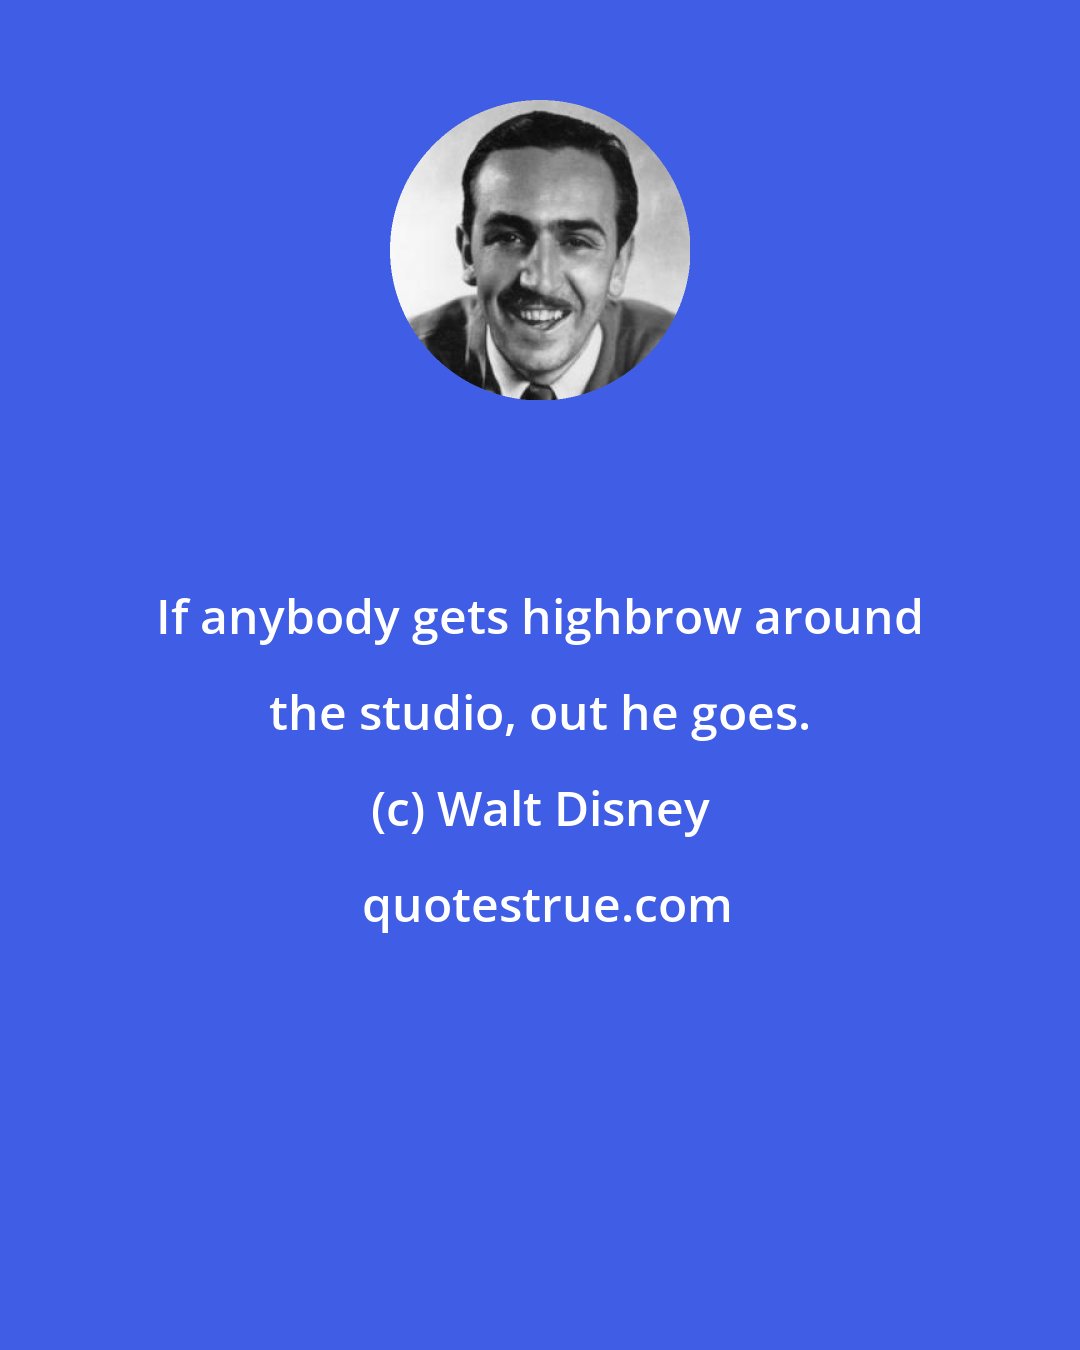 Walt Disney: If anybody gets highbrow around the studio, out he goes.